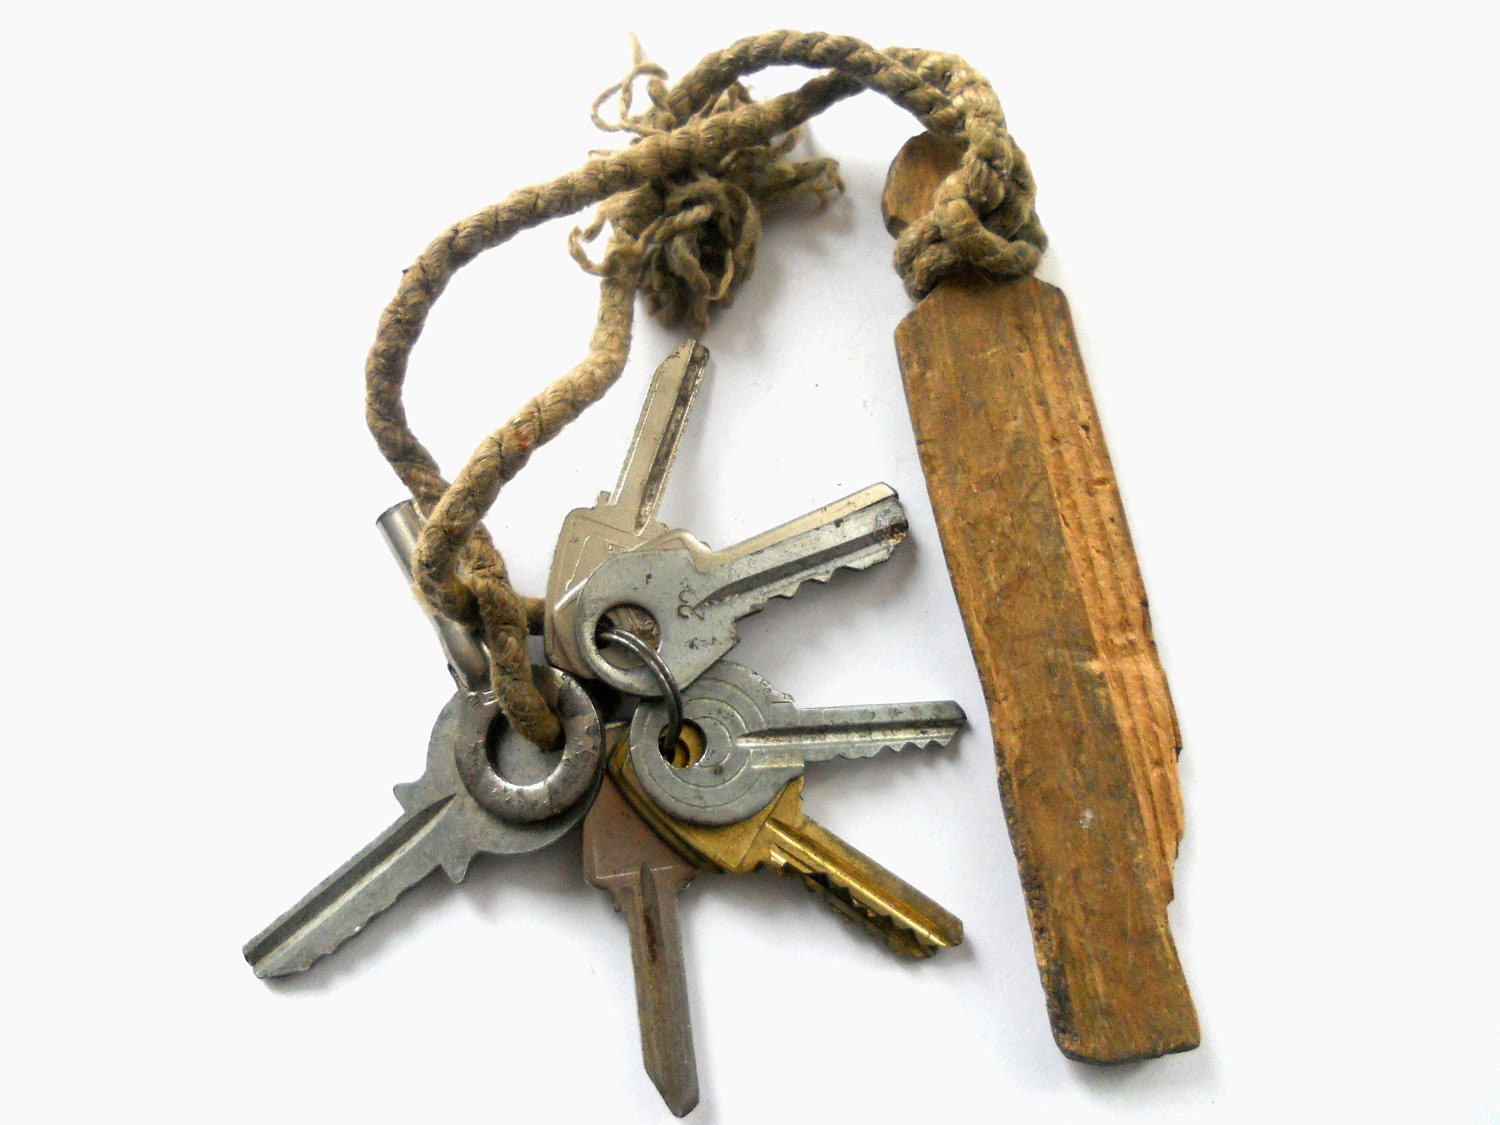 Lot of 10 Set of 10 Soviet vintage keys Assorted key set from USSR era Bundle of keys - TasteVintage